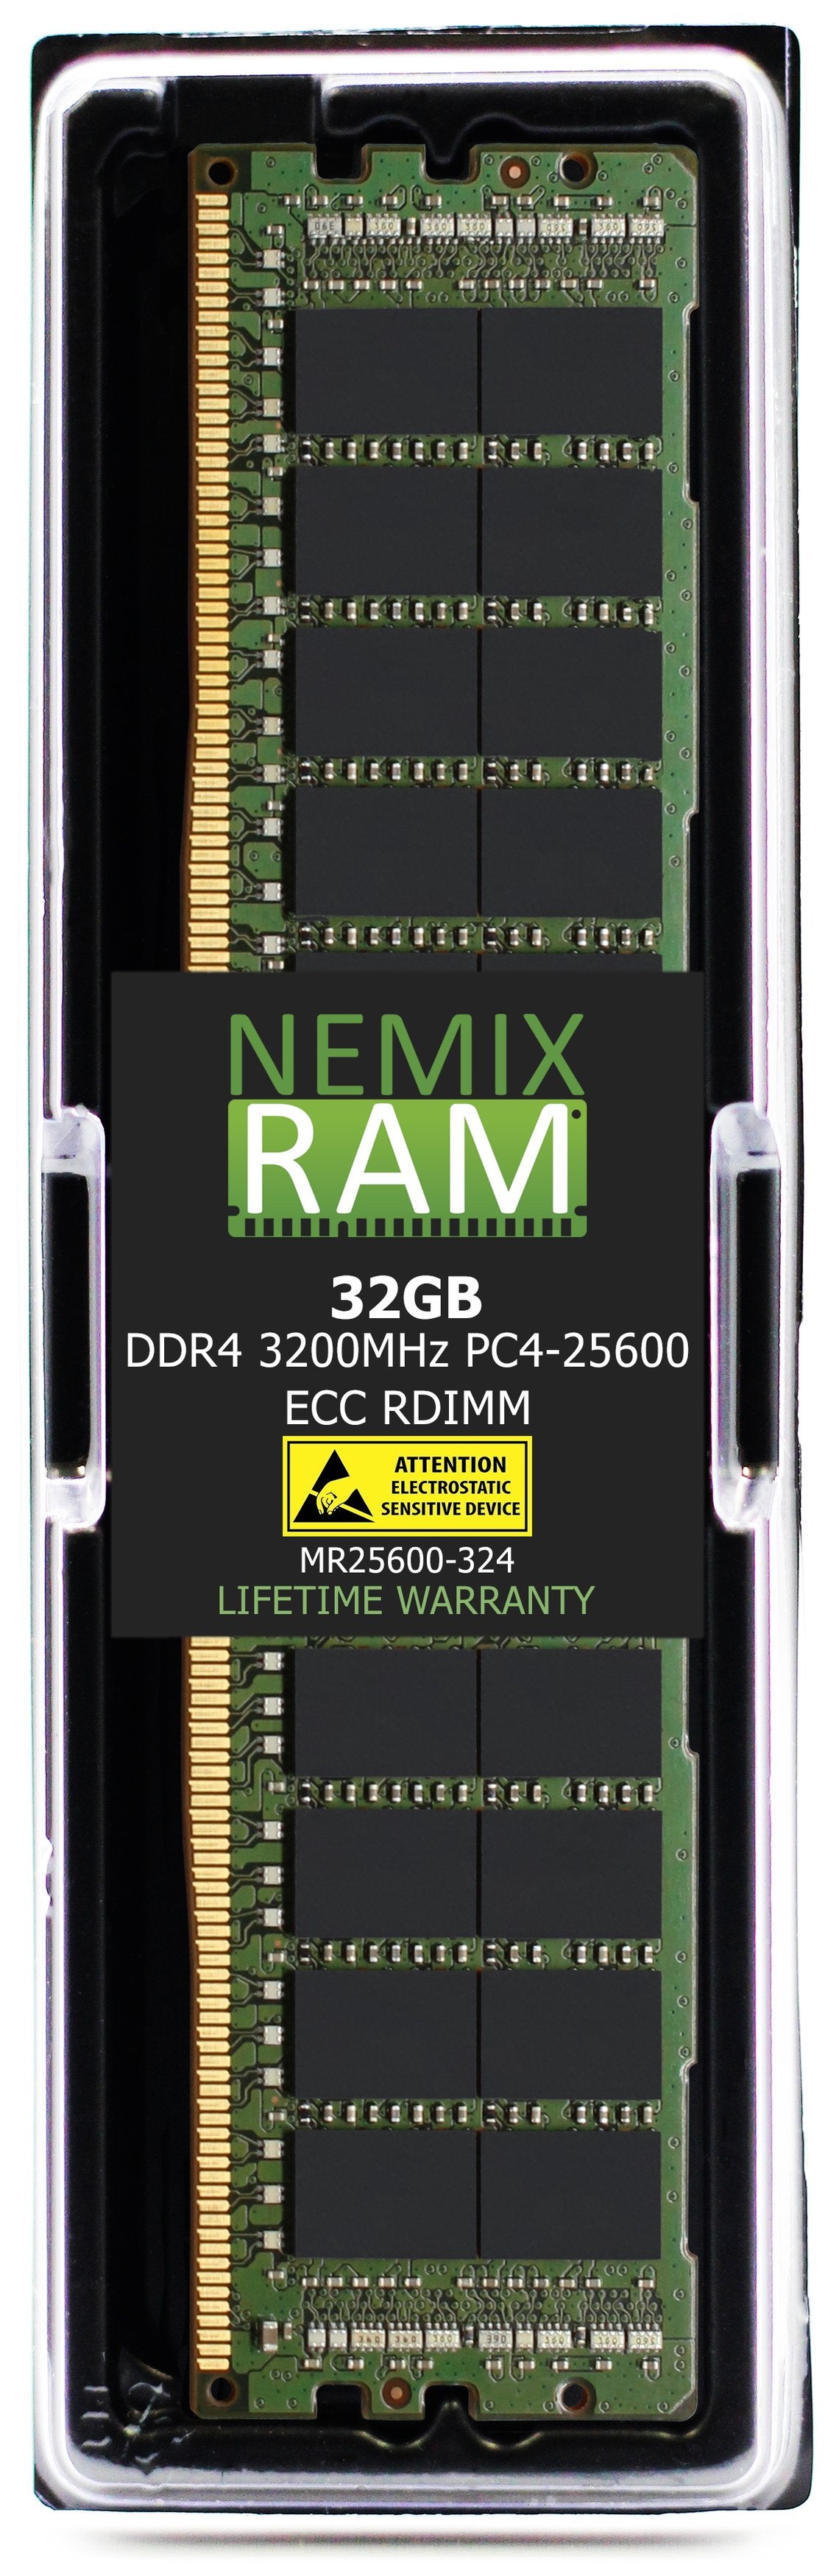 DELL PowerEdge R6525 Rack Server Memory Upgrade